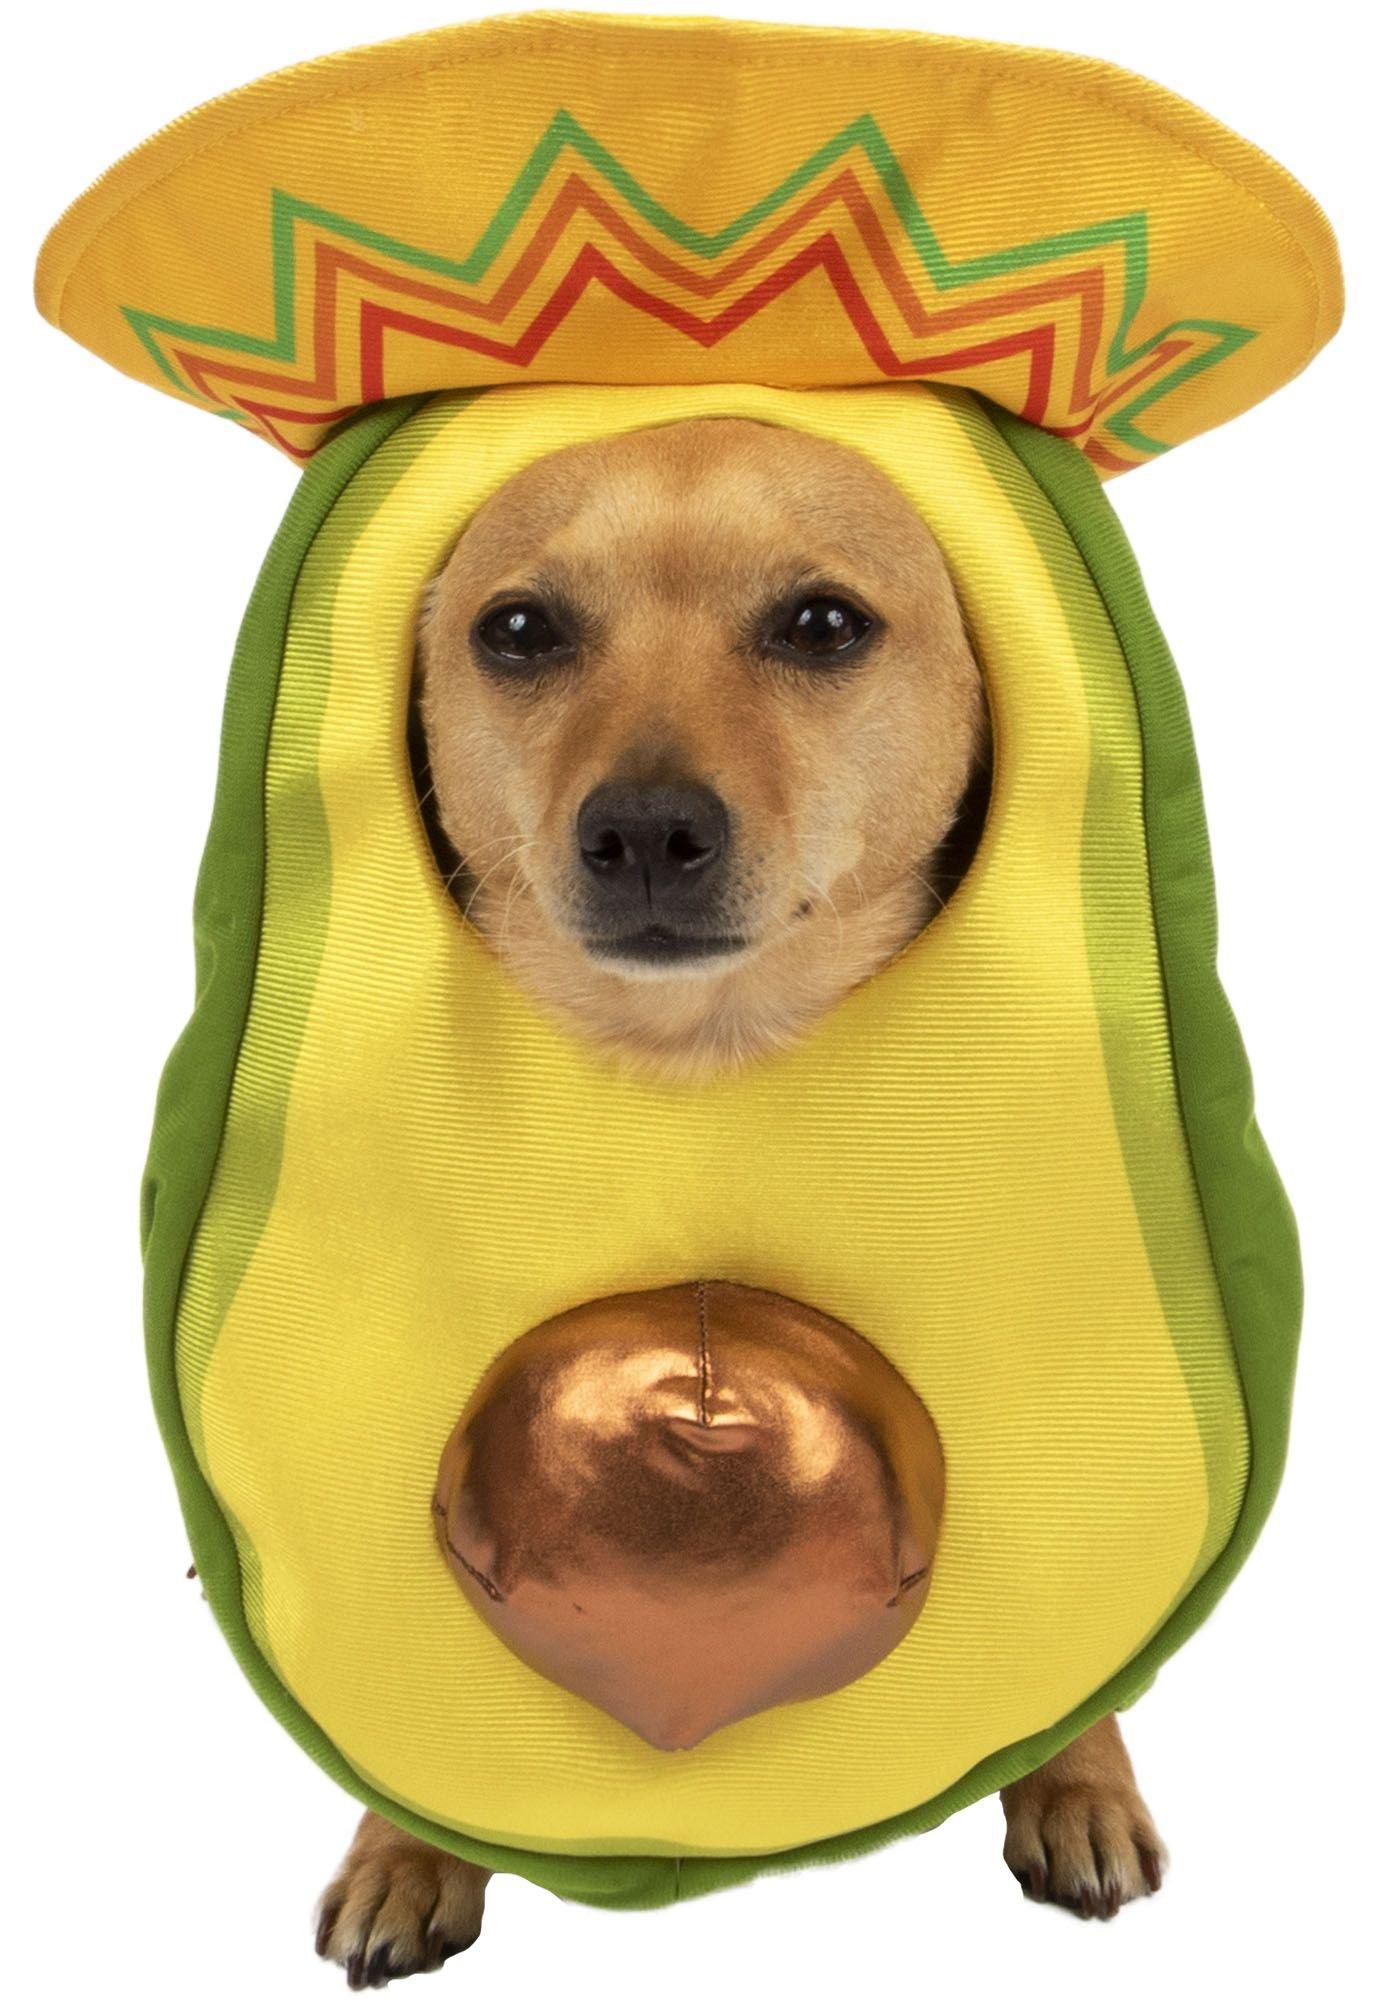 can dogs like avocado